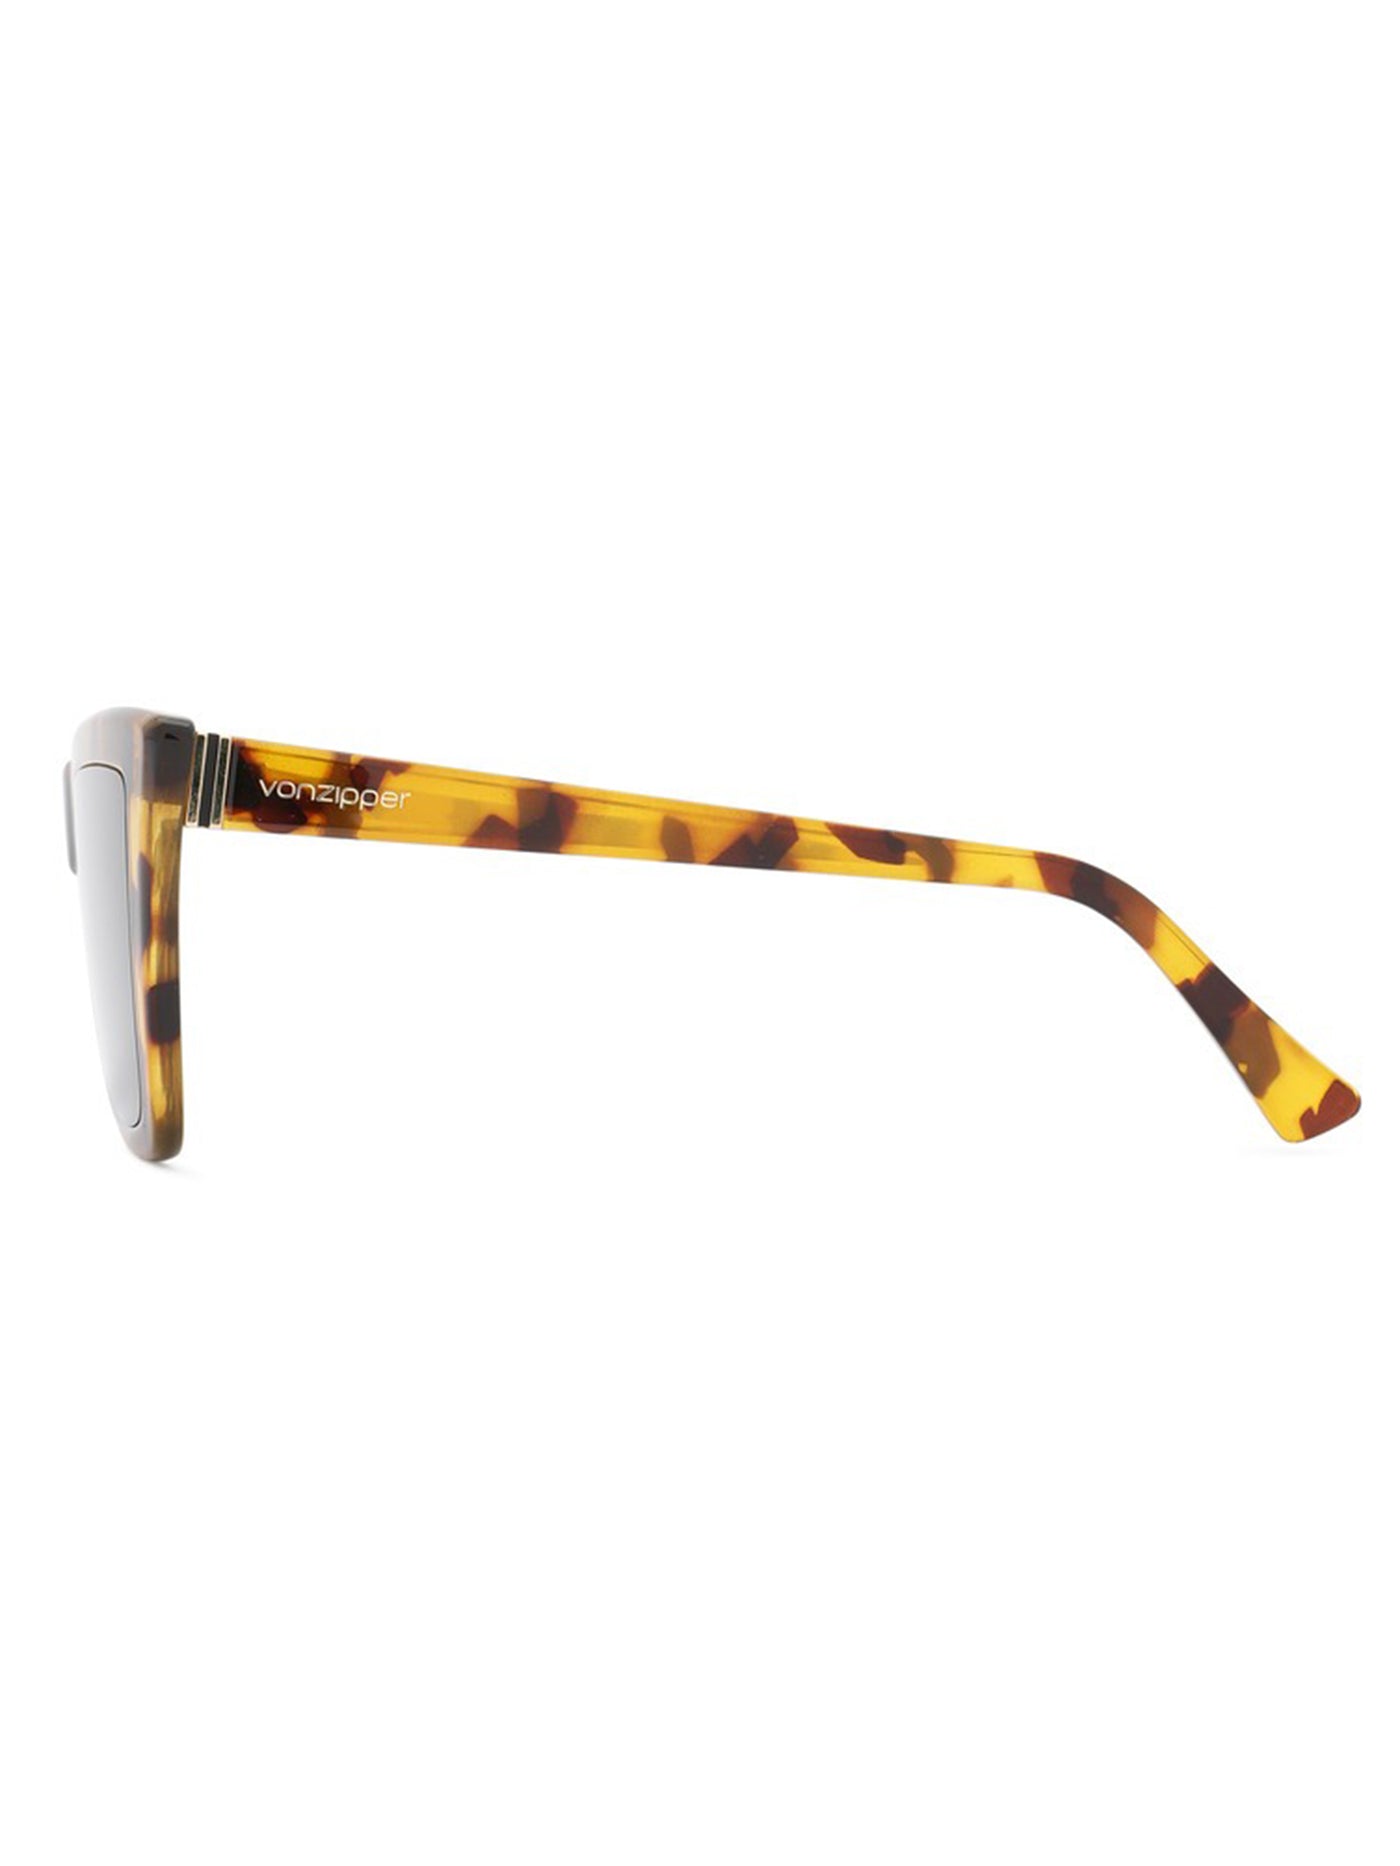 Von Zipper Stiletta Spotted Tort/Bronze Sunglasses